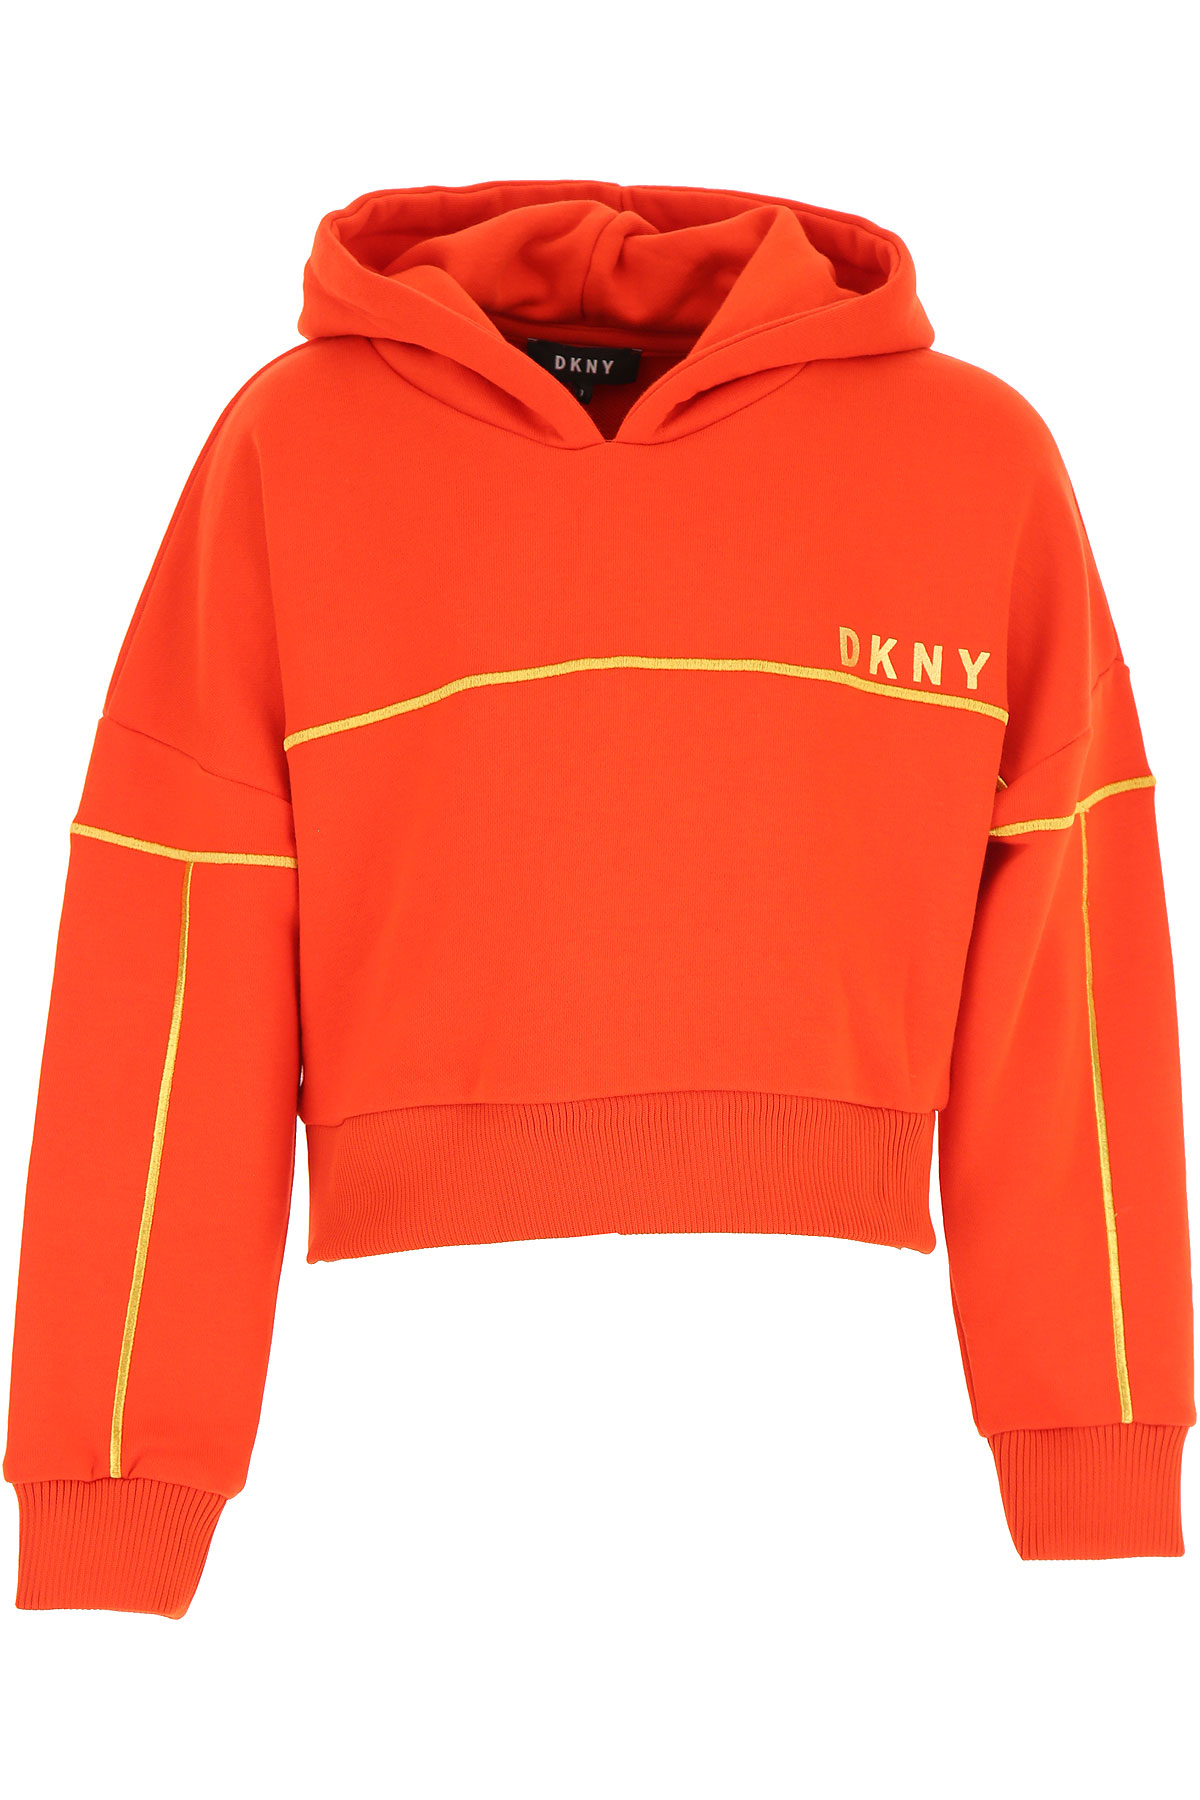 DKNY Kinder Sweatshirt & Kapuzenpullover für Mädchen Günstig im Sale, Rot, Baumwolle, 2017, 10Y 12Y 14Y 16Y 8Y